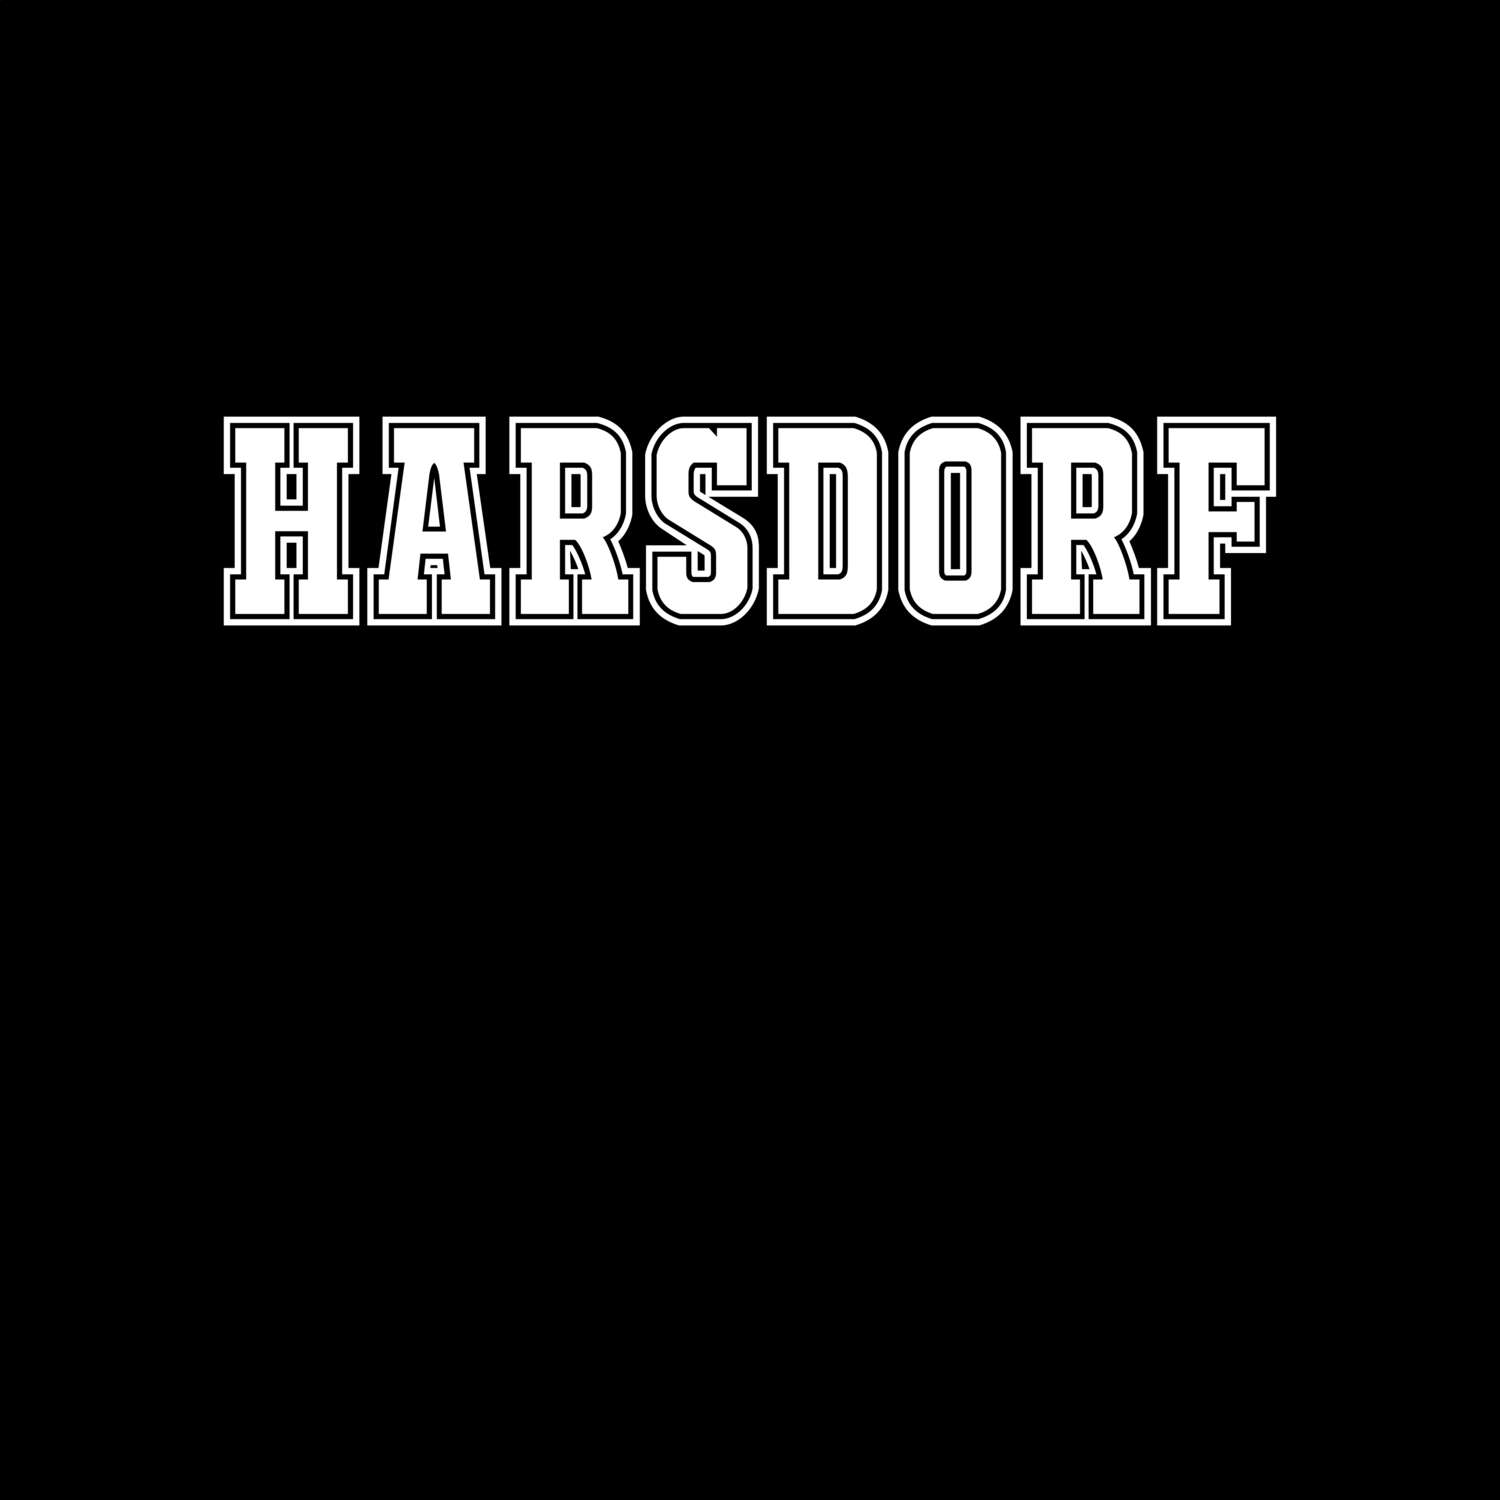 Harsdorf T-Shirt »Classic«